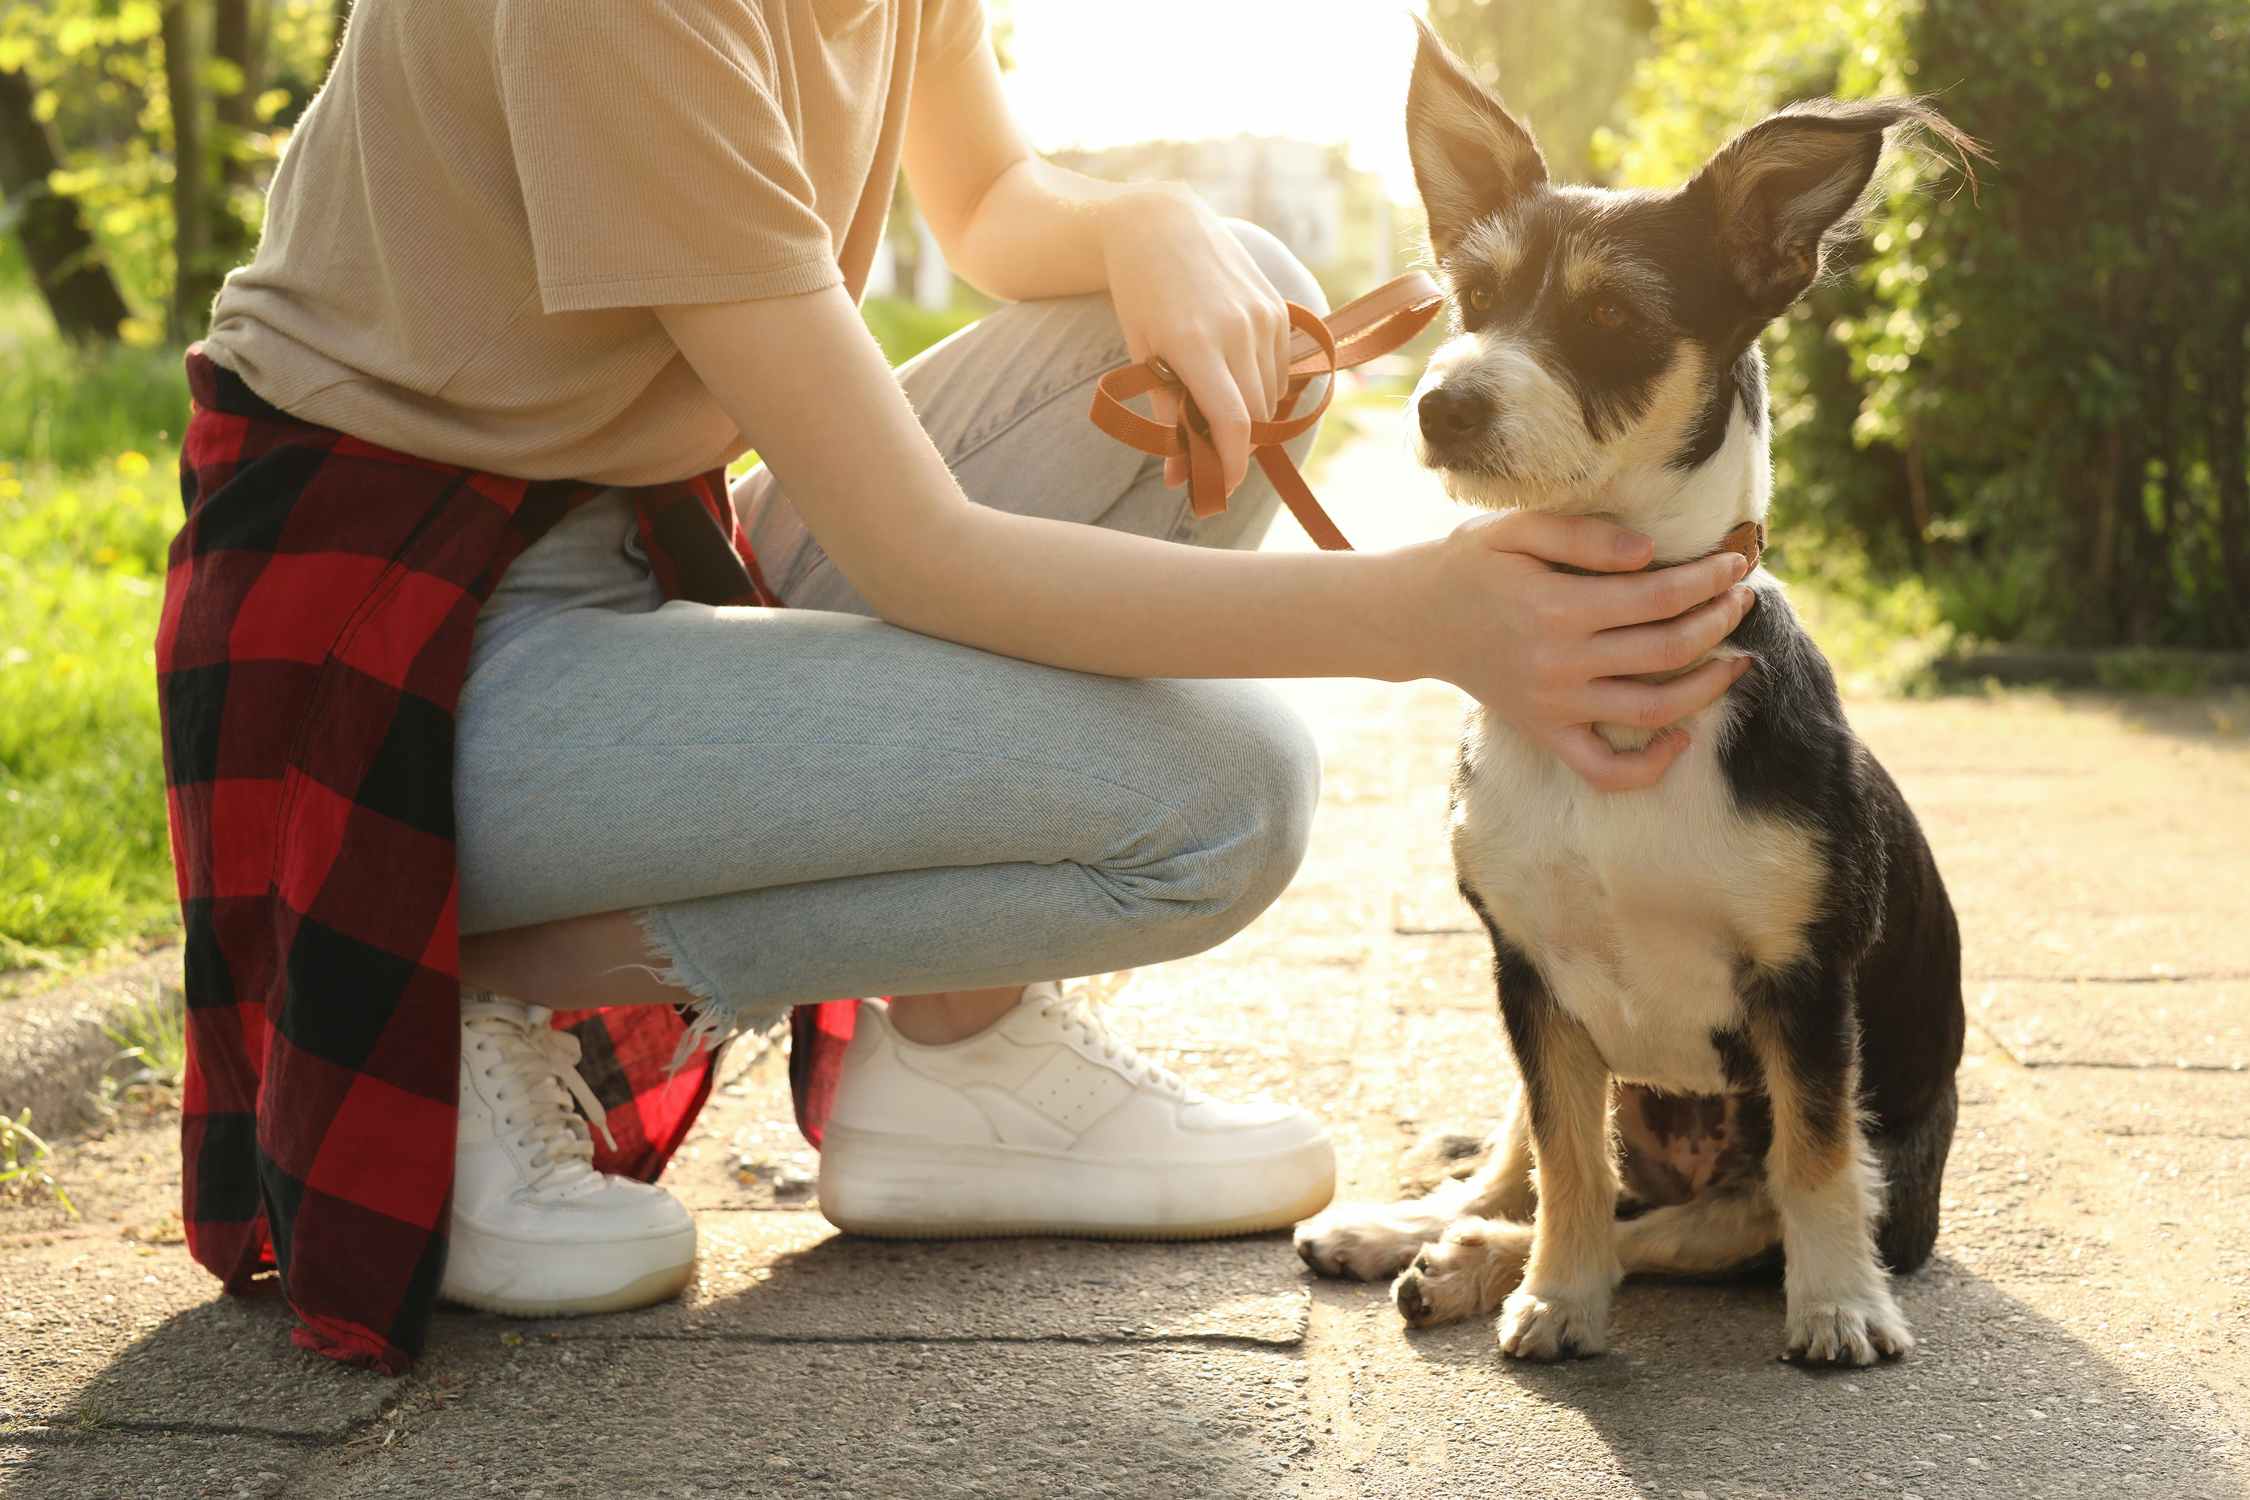 teenage girl kneeling with dog during walk